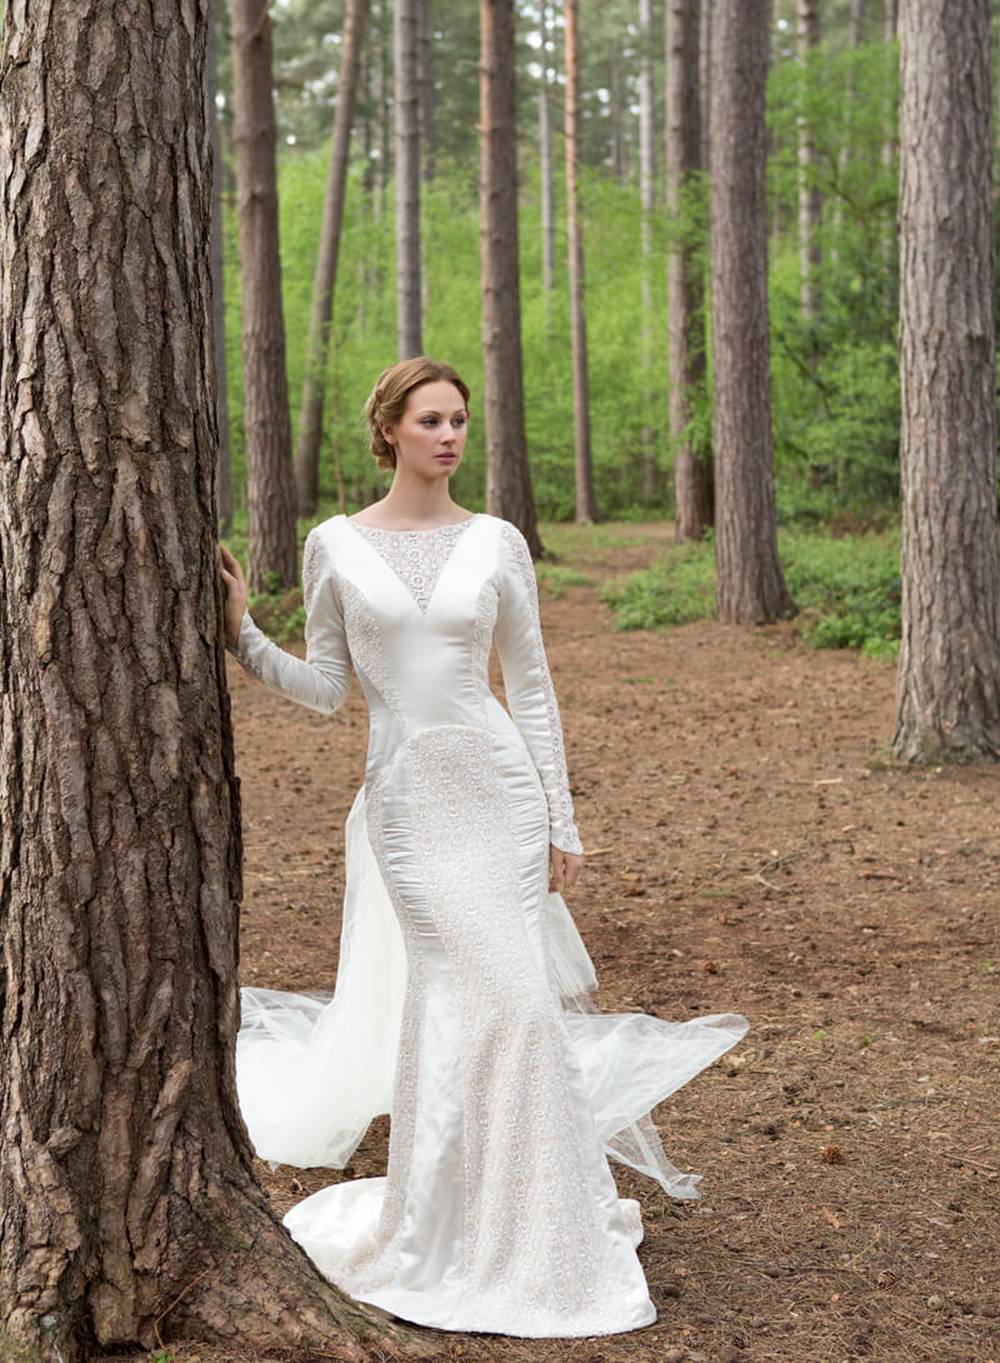 sanyukta shrestha sustainable wedding dress